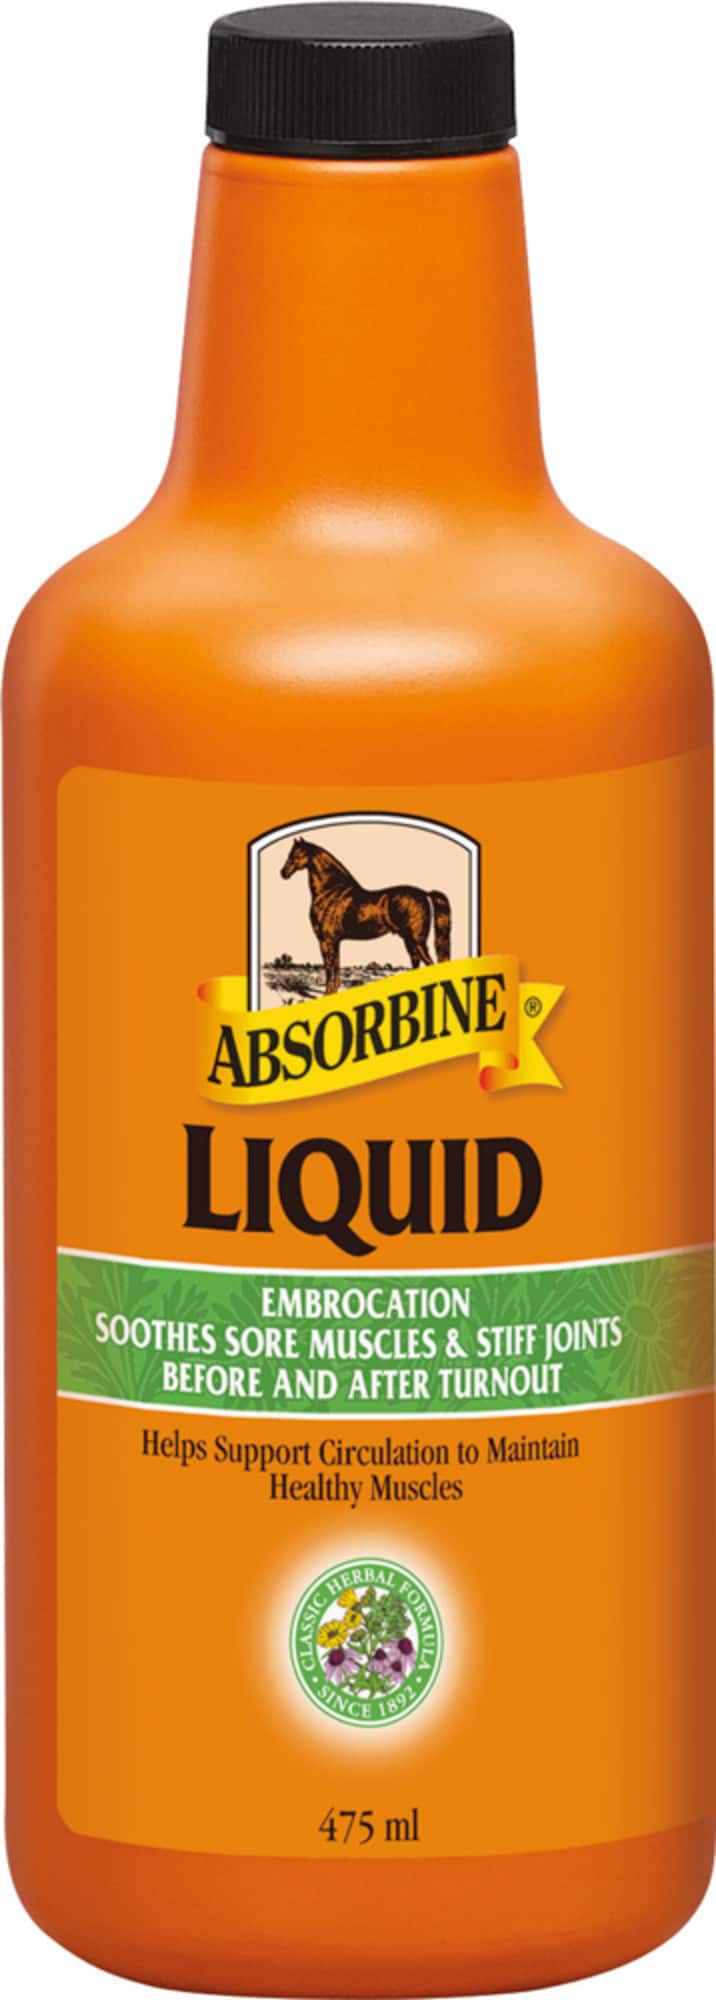 Absorbine Embrocation Liquid VetLin, 475ml